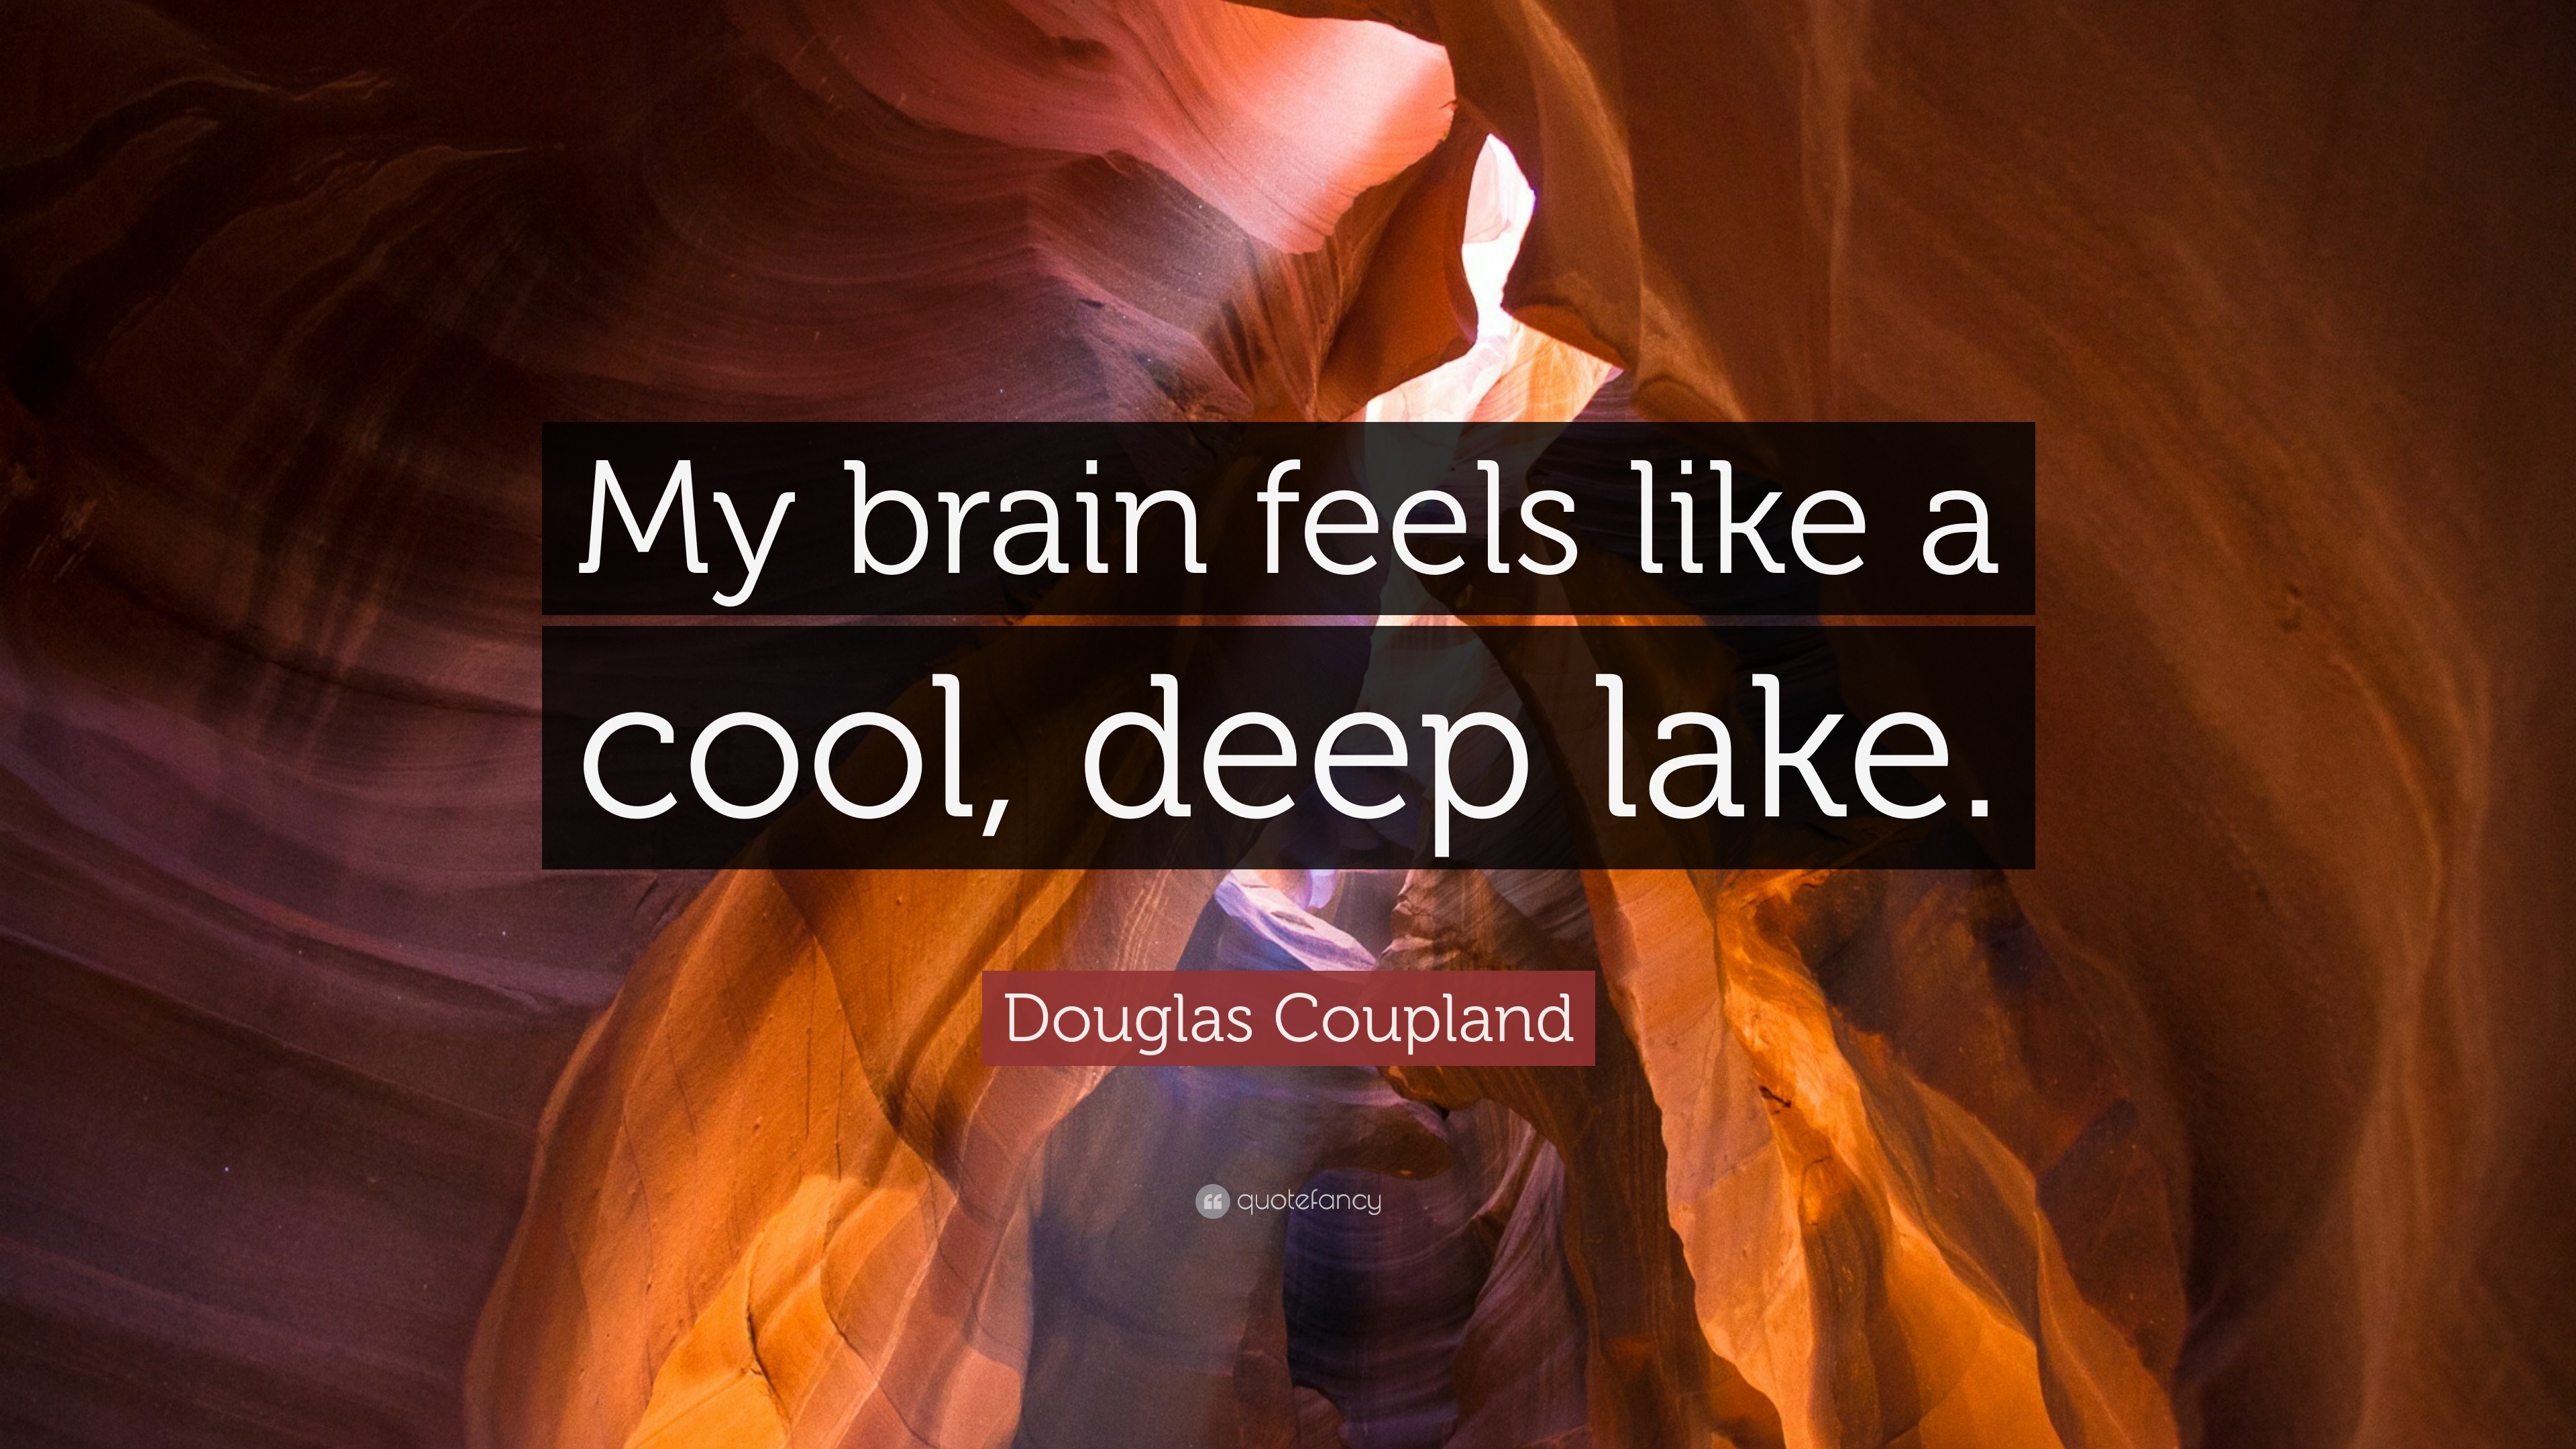 Douglas Coupland Quote: “My brain feels like a cool, deep lake.”